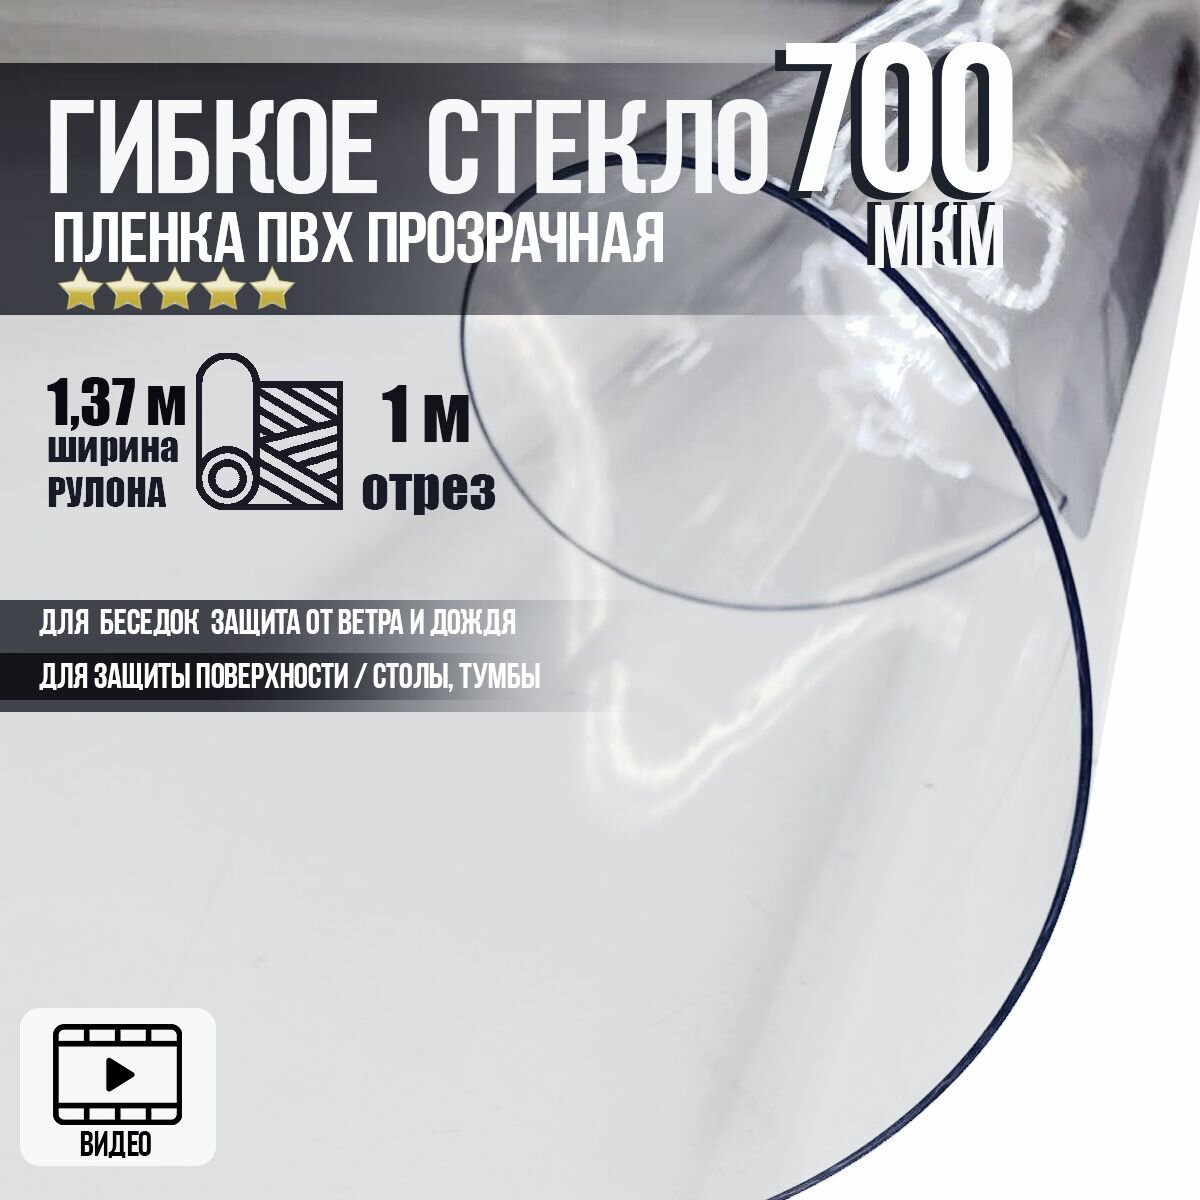 Пленка ПВХ для мягких окон скатерть 700мкм 0,7мм прозрачная, гибкое стекло, 1 м